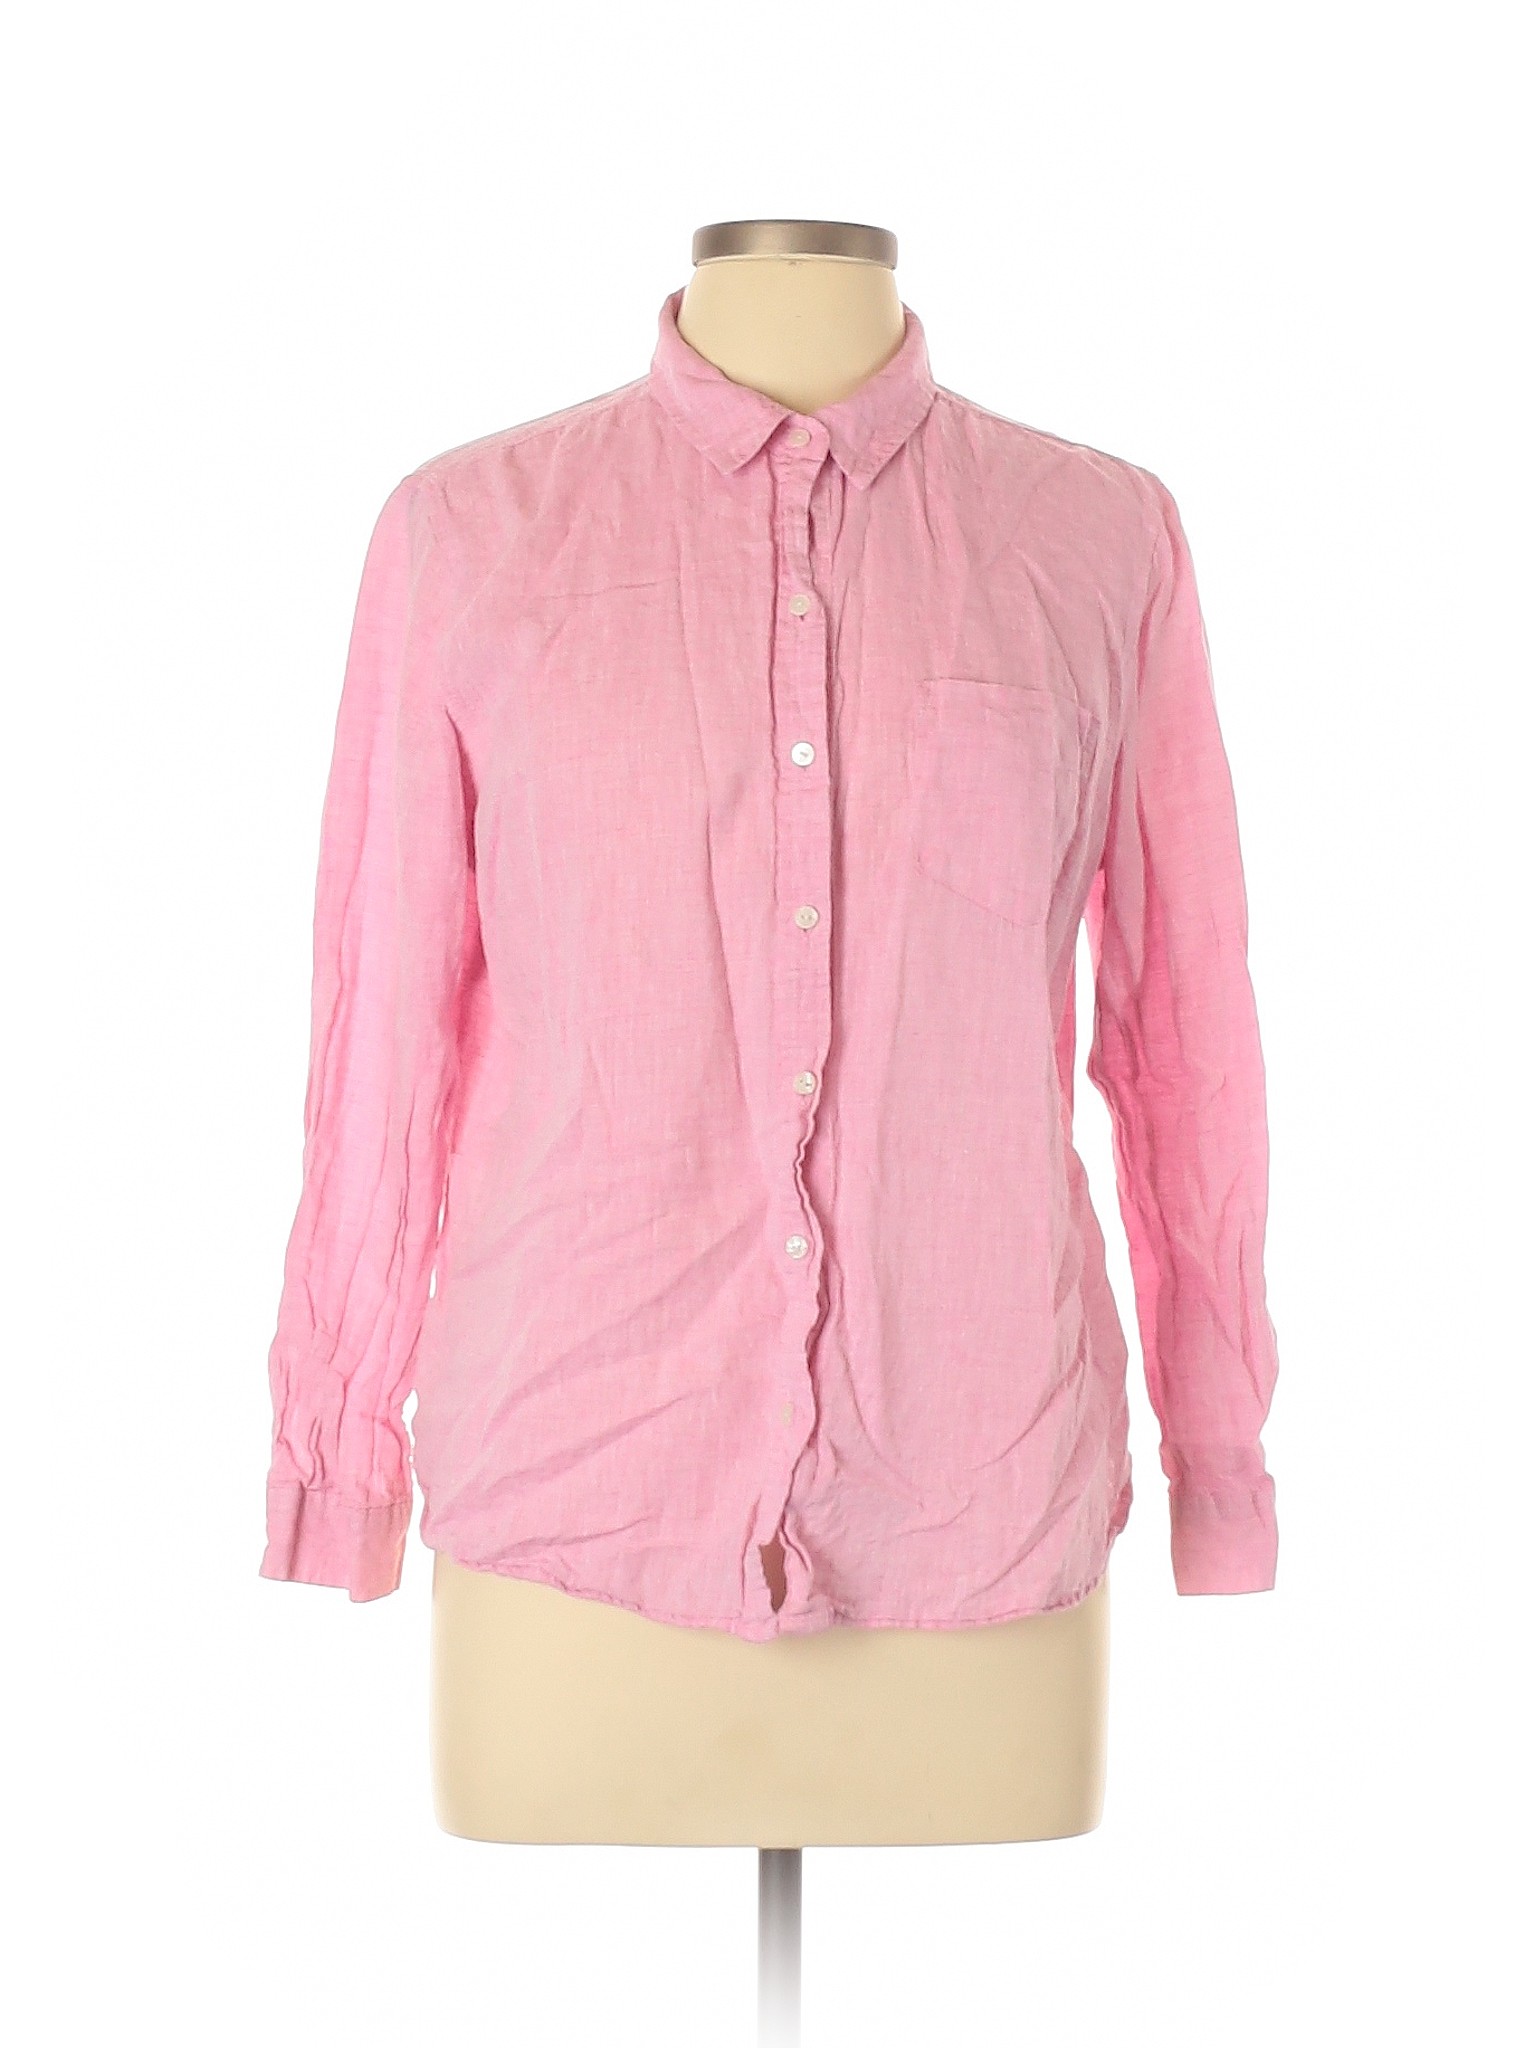 Old Navy Women Pink Long Sleeve Button-Down Shirt XL | eBay